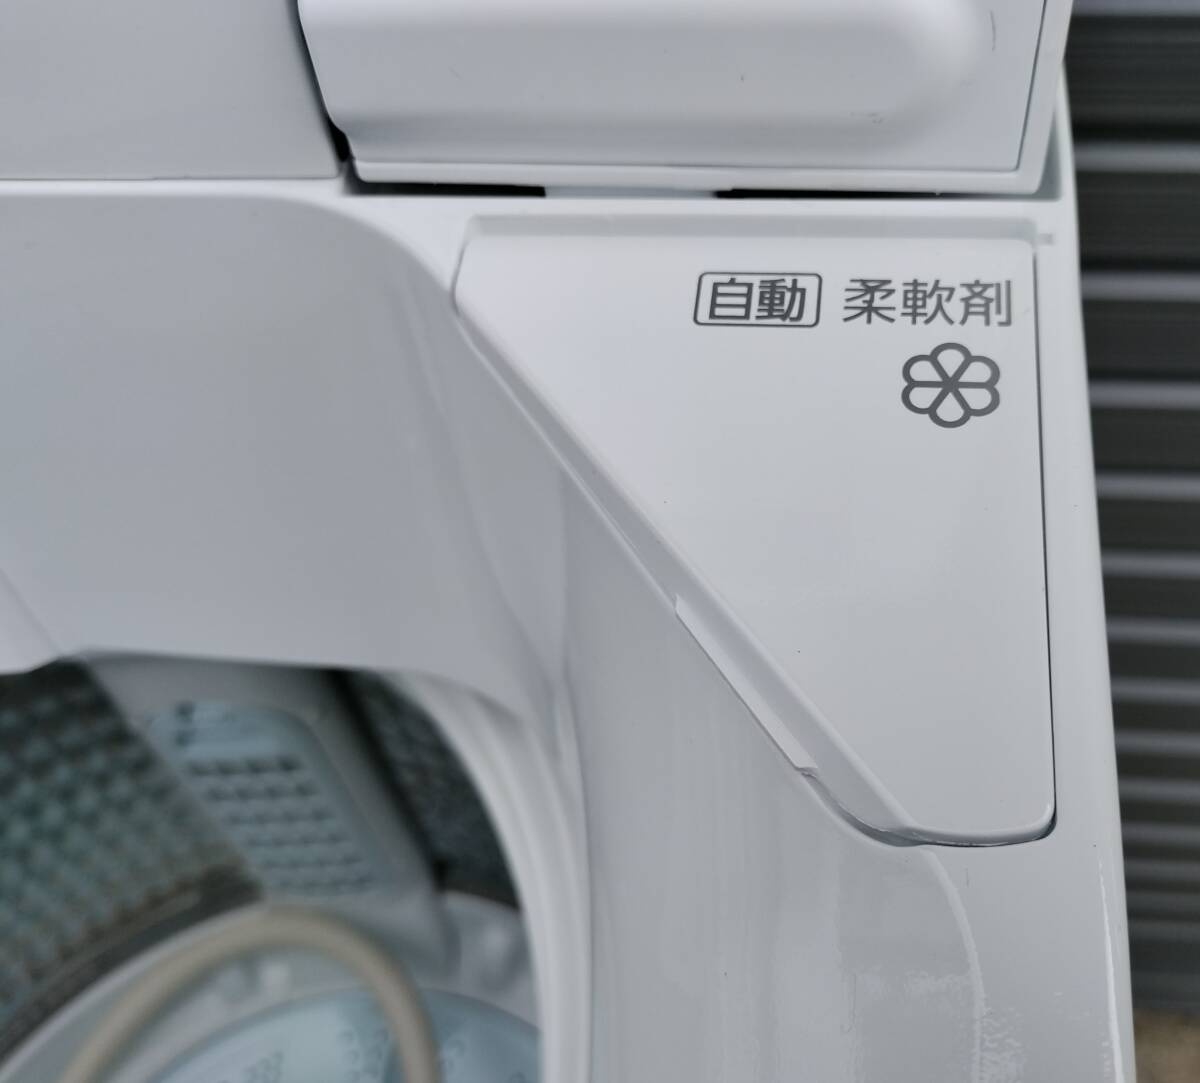 53 美品【愛知店舗・清掃済】2021年製★アクア 8.0kg 全自動洗濯機 高濃度クリーン浸透RX 3Dパワフル洗浄 洗剤自動投入 AQW-VA8M_画像6